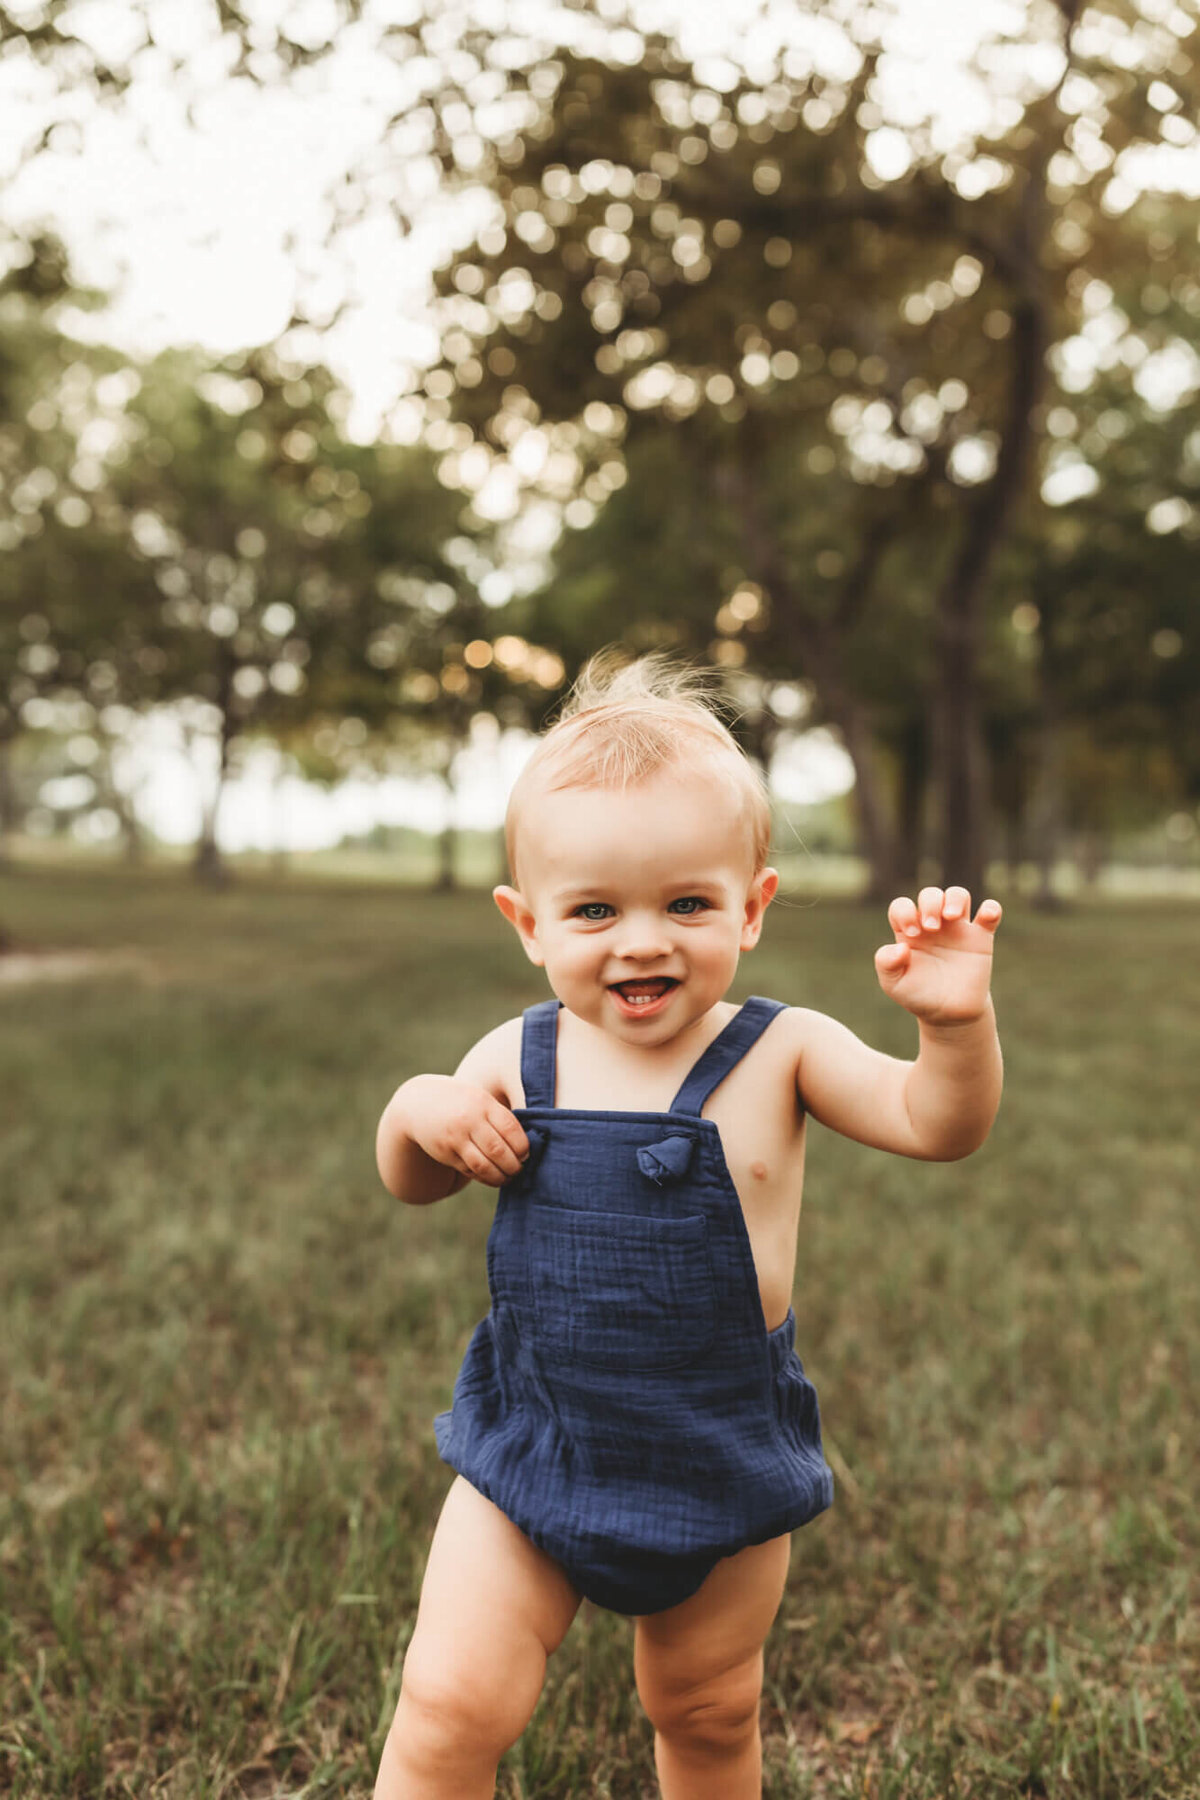 baby boy runs toward camera, wearing blue outfit for his birthday pics.